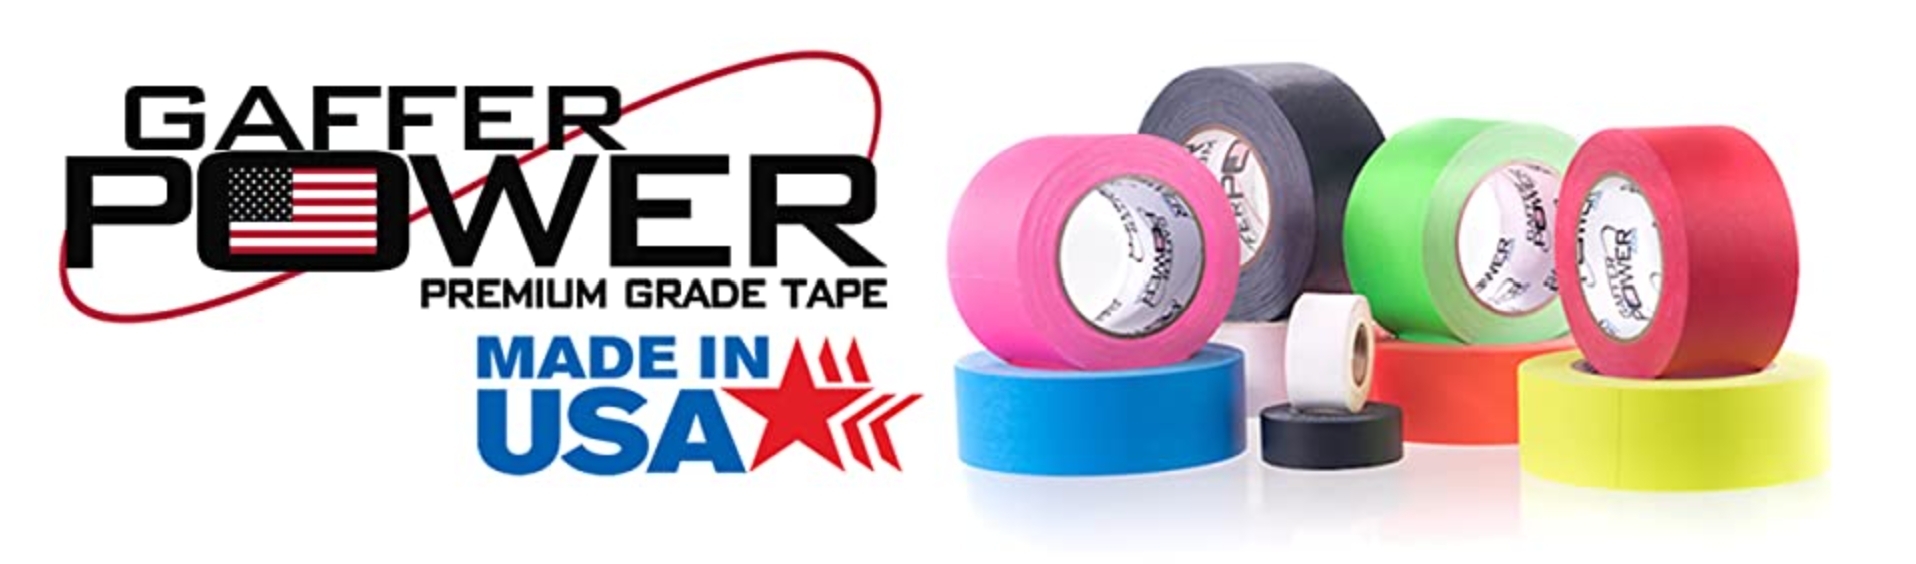 Kwaadaardige tumor Tub Raap Premium Grade Professional Gaffer Tape and Tools – Gaffer Power